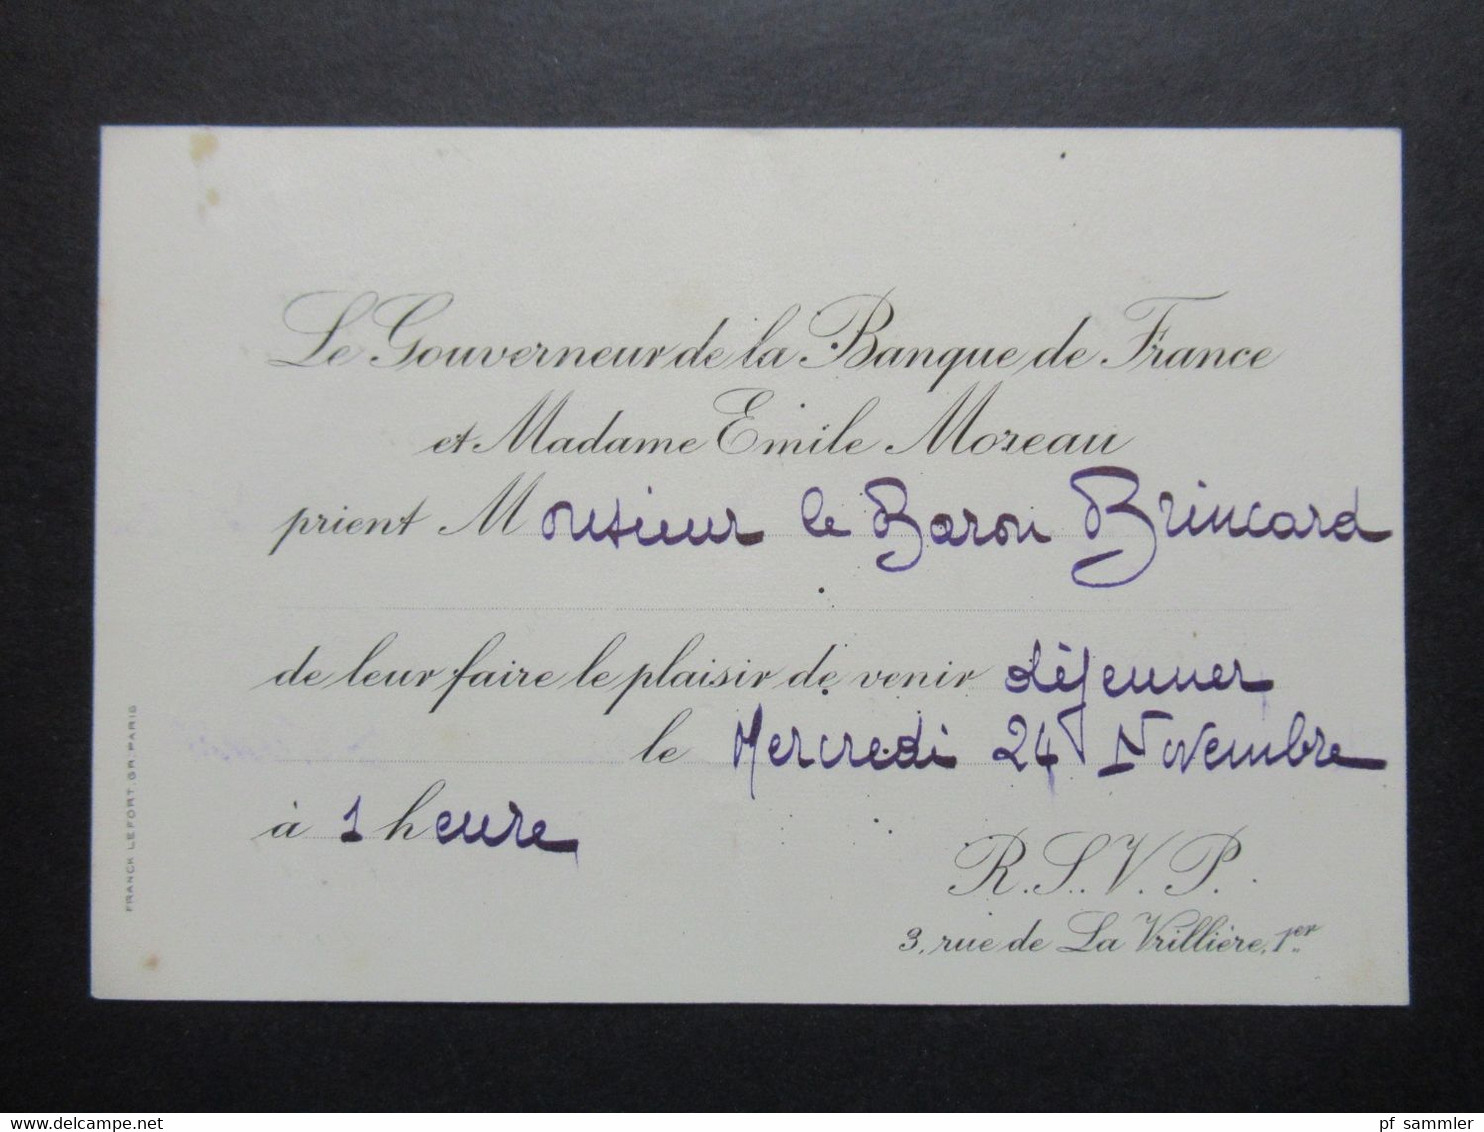 Frankreich 1920er Jahre Einladung Dejeuner Vom Governeur De La Banque De France Et Madame Emile Moreau - Eintrittskarten